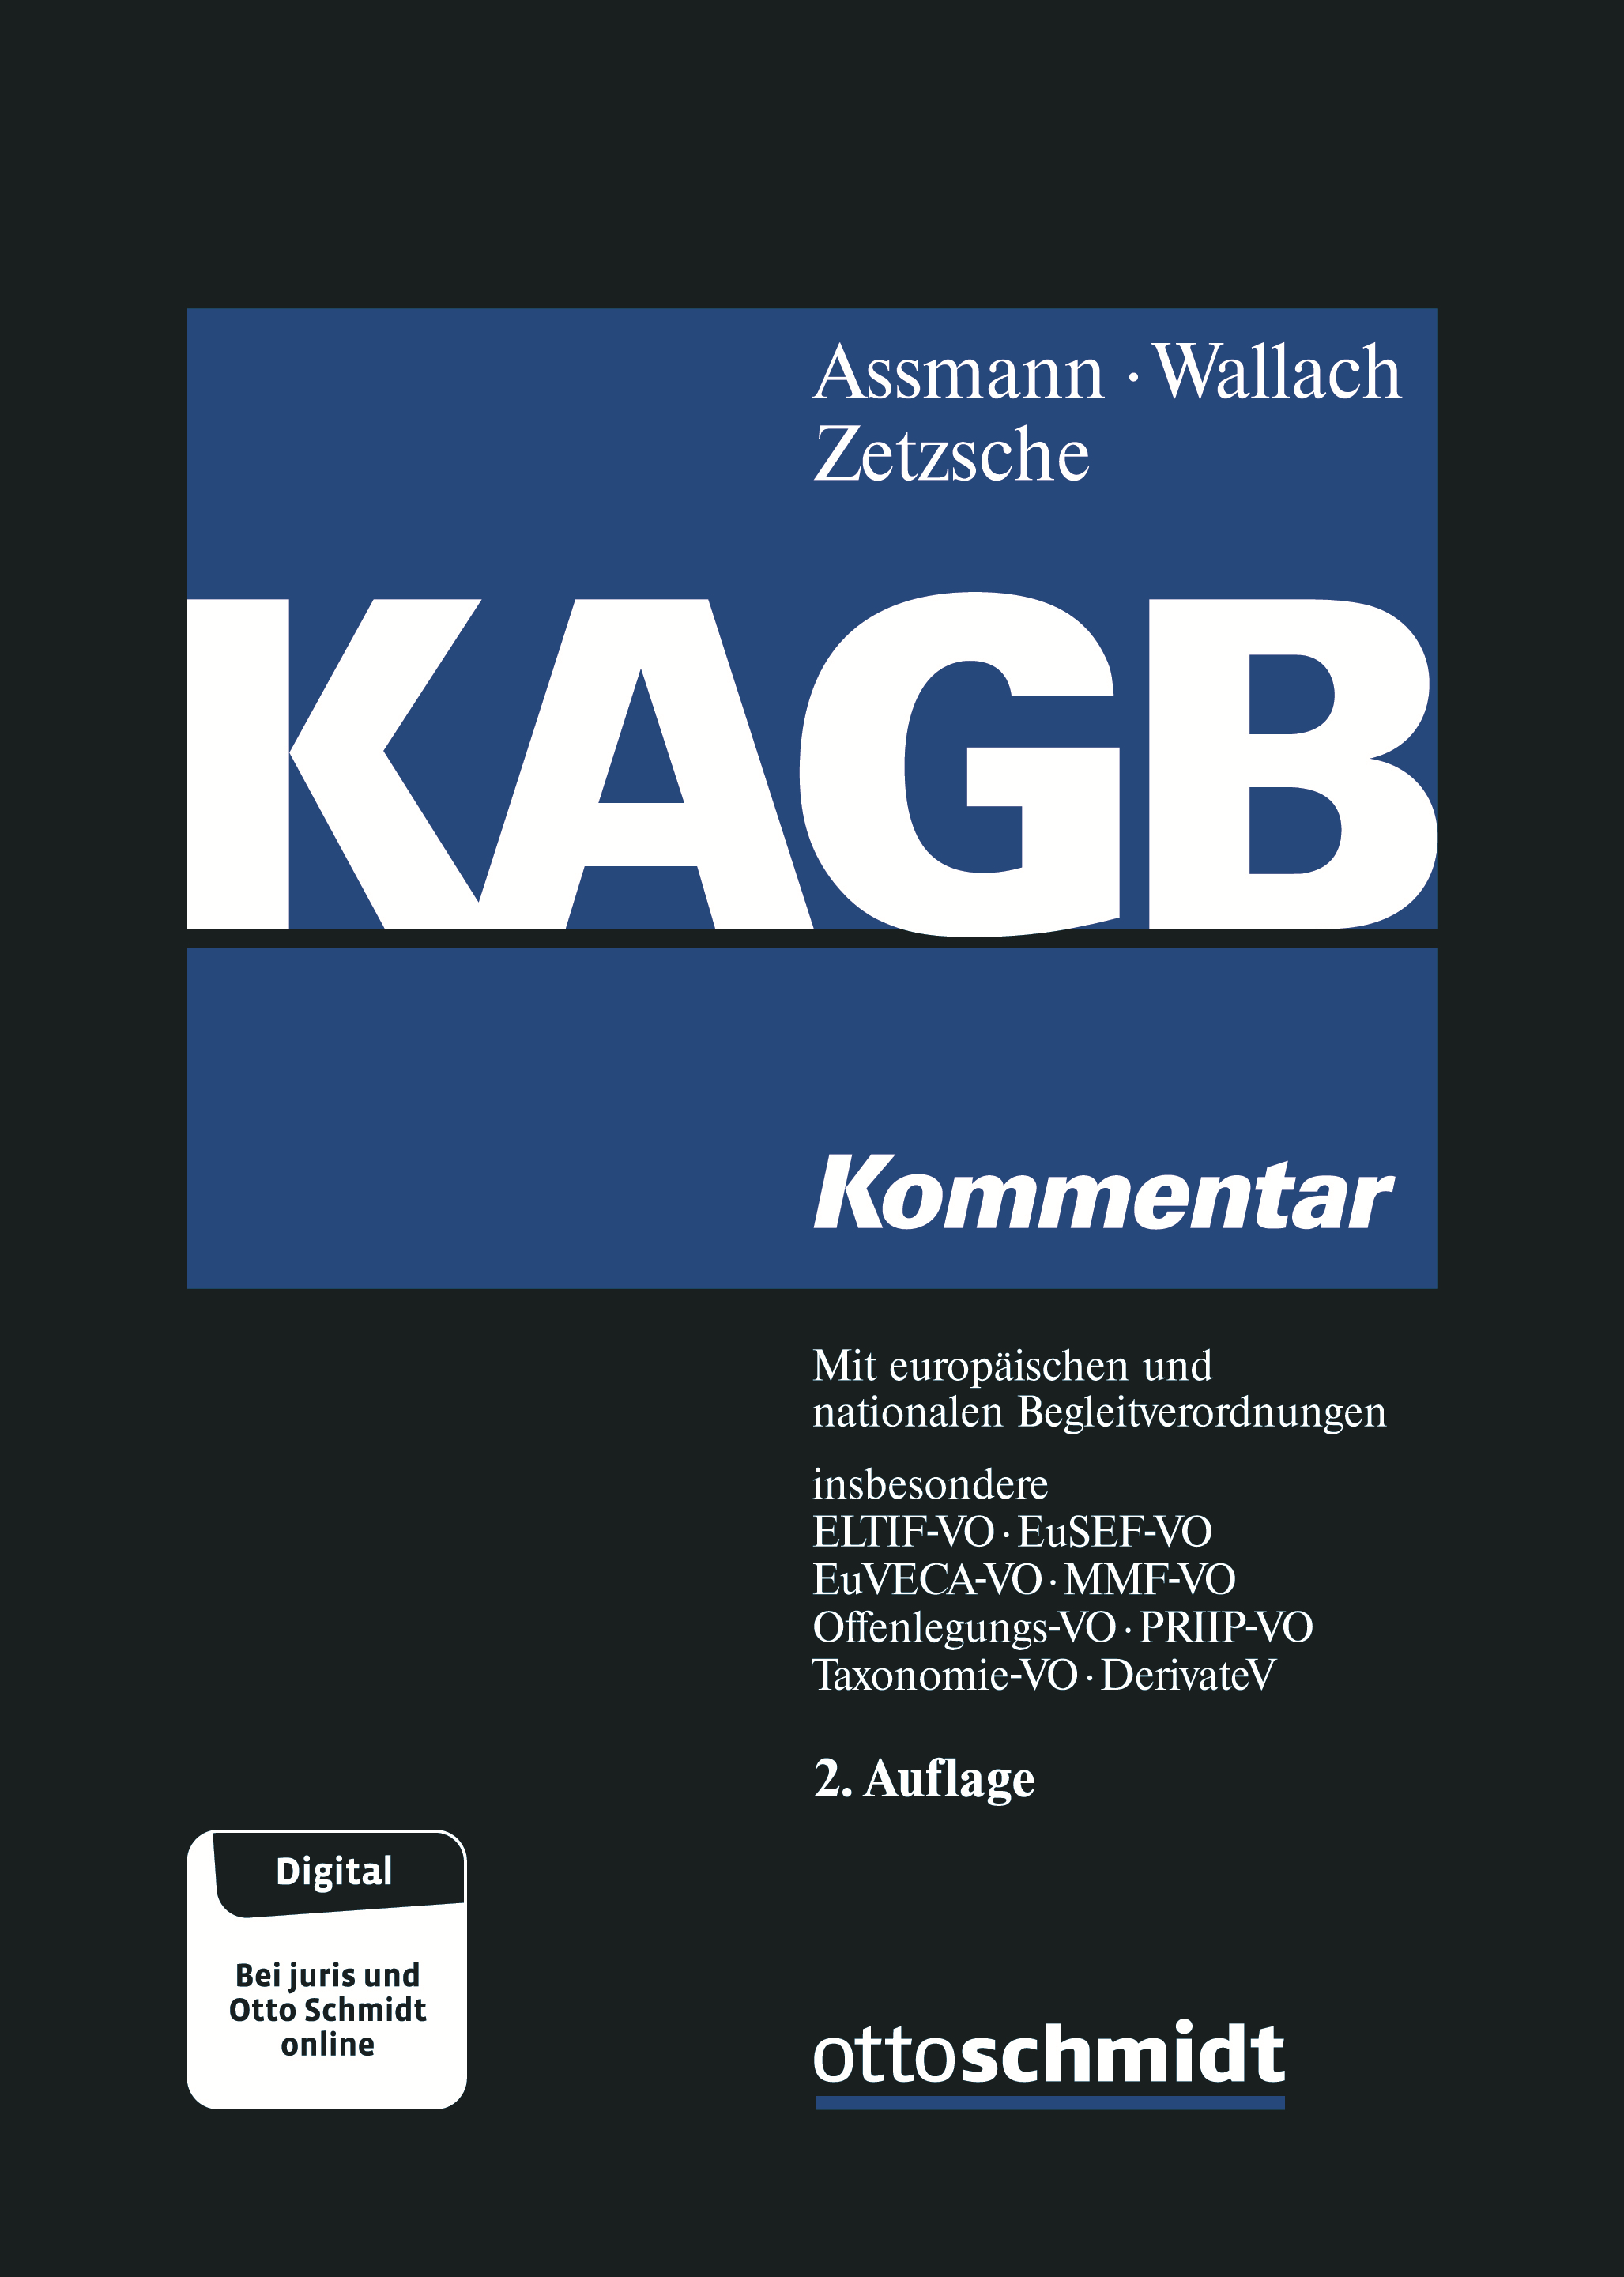 Abbildung: KAGB